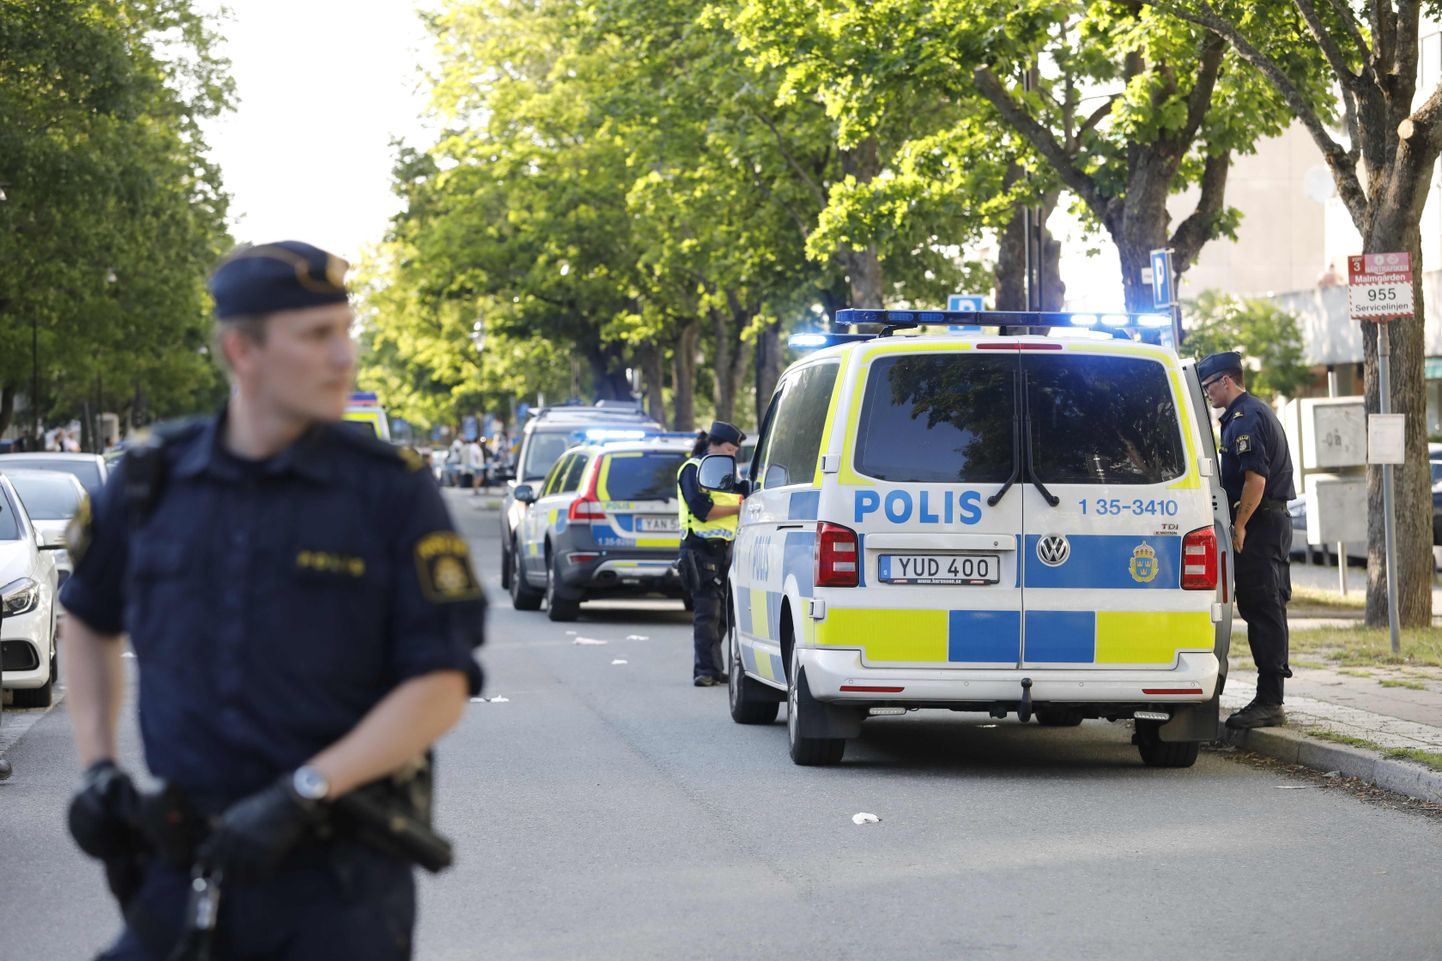 Stockholmi politsei. Foto on illustratiivne.